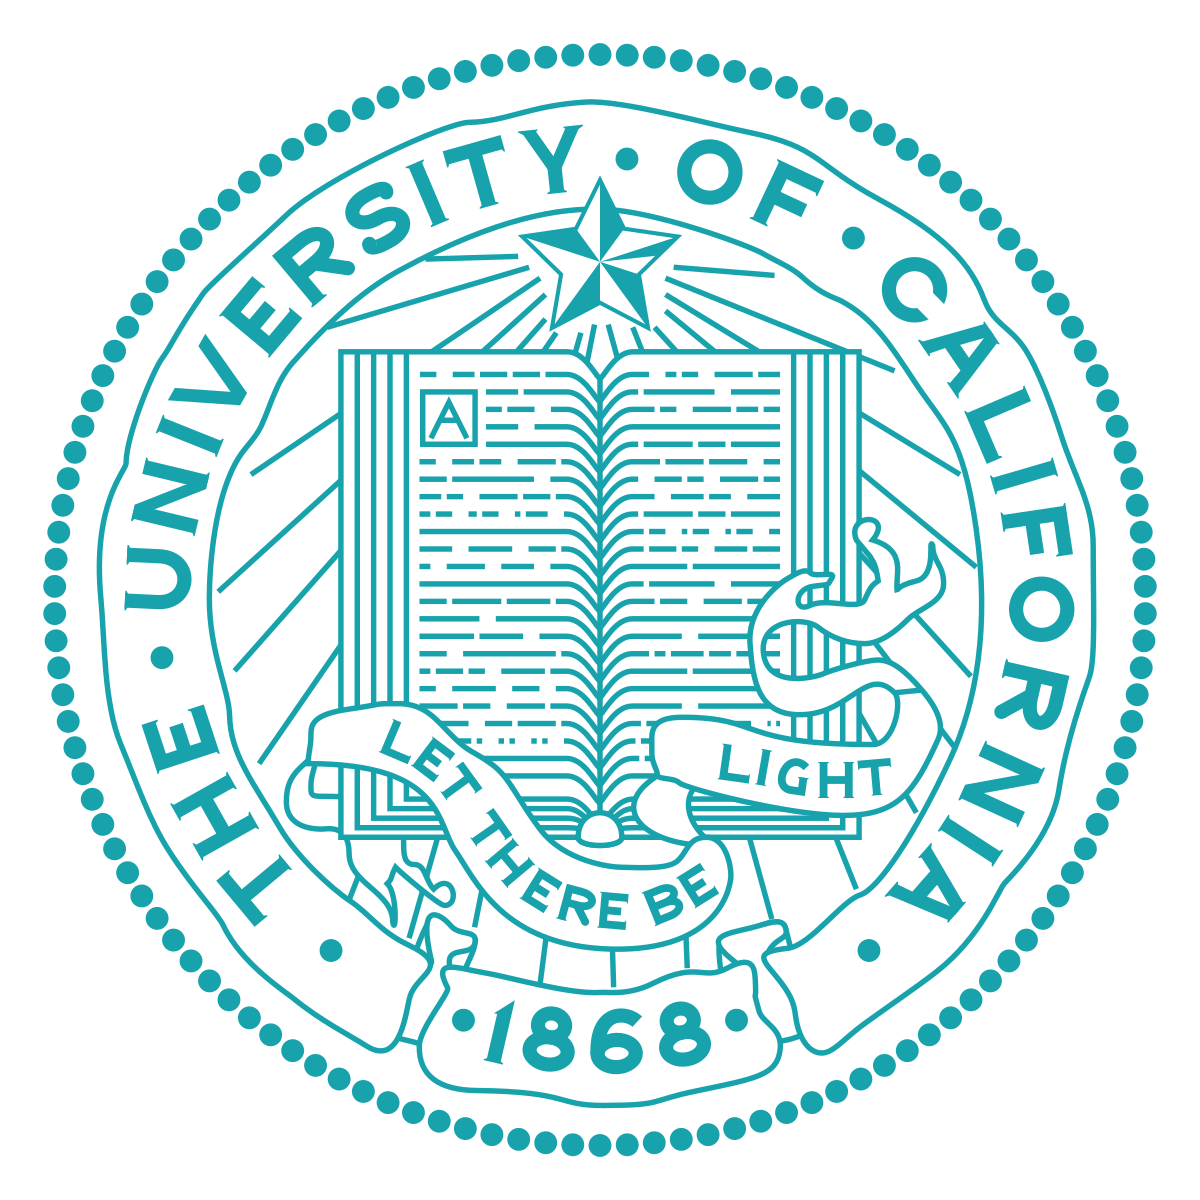 UCSF Logo - University of California, San Francisco